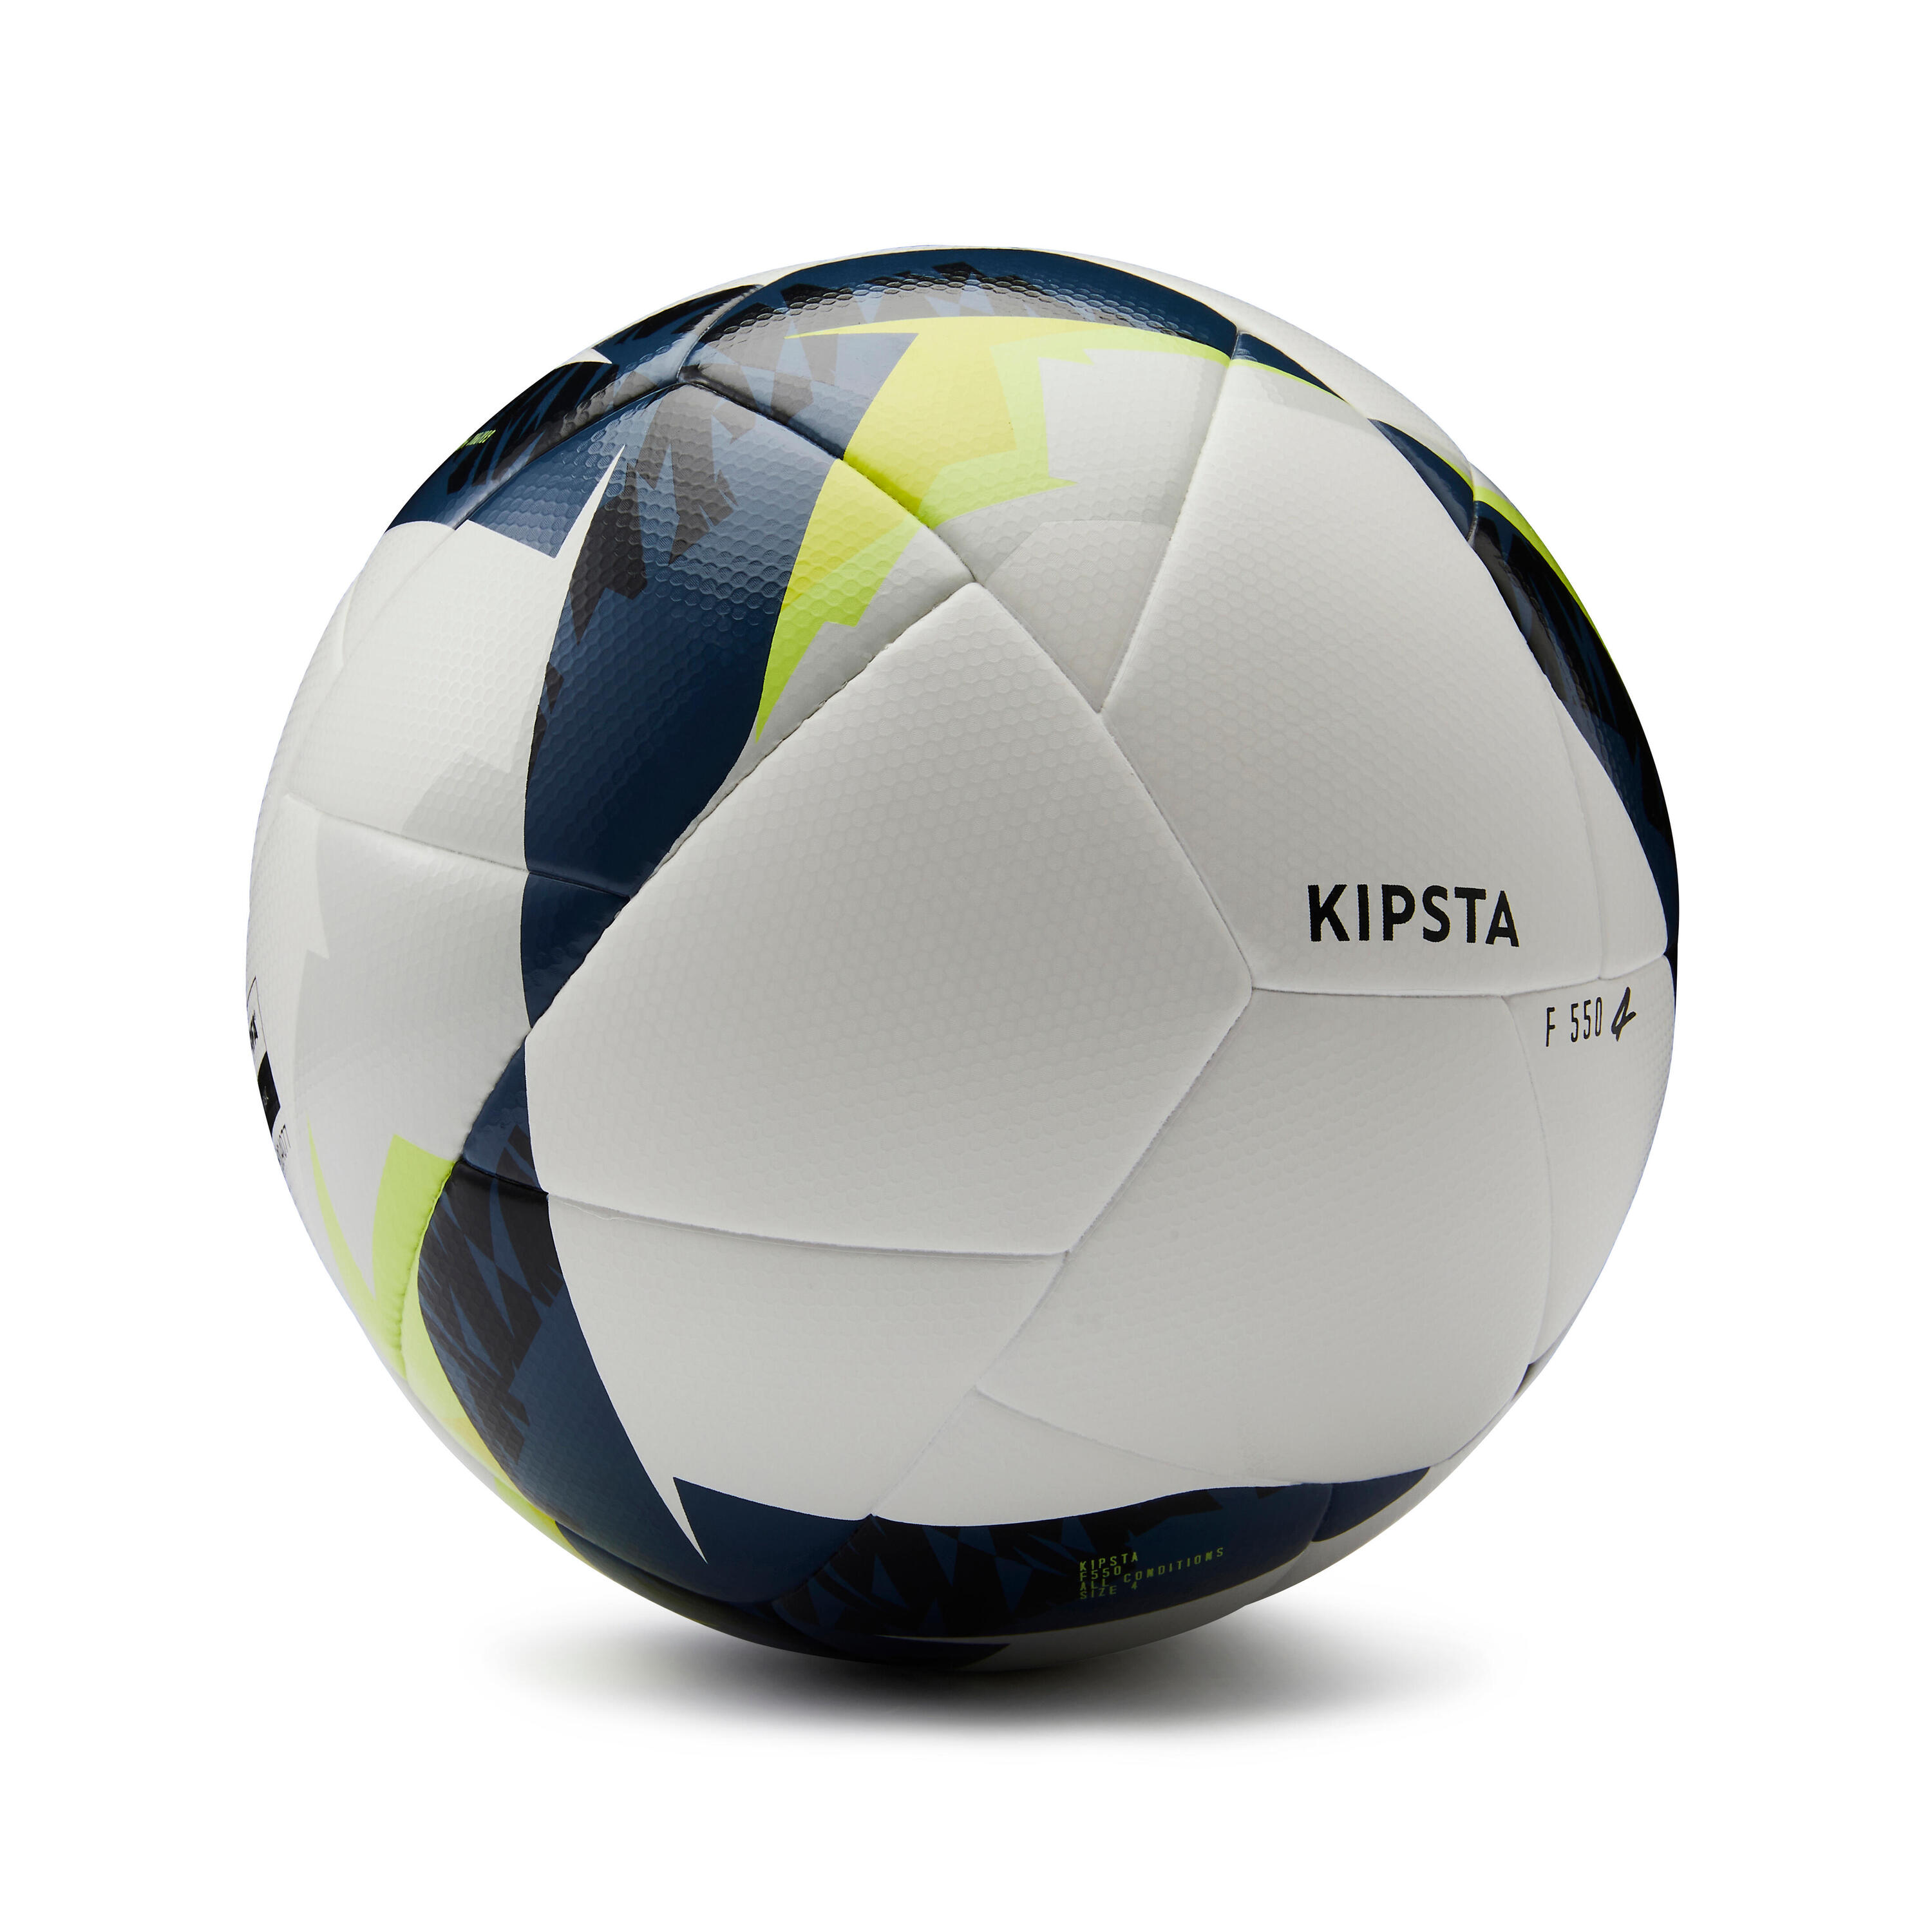 KIPSTA Hybrid Football FIFA Basic F550 Size 4 - White/Yellow